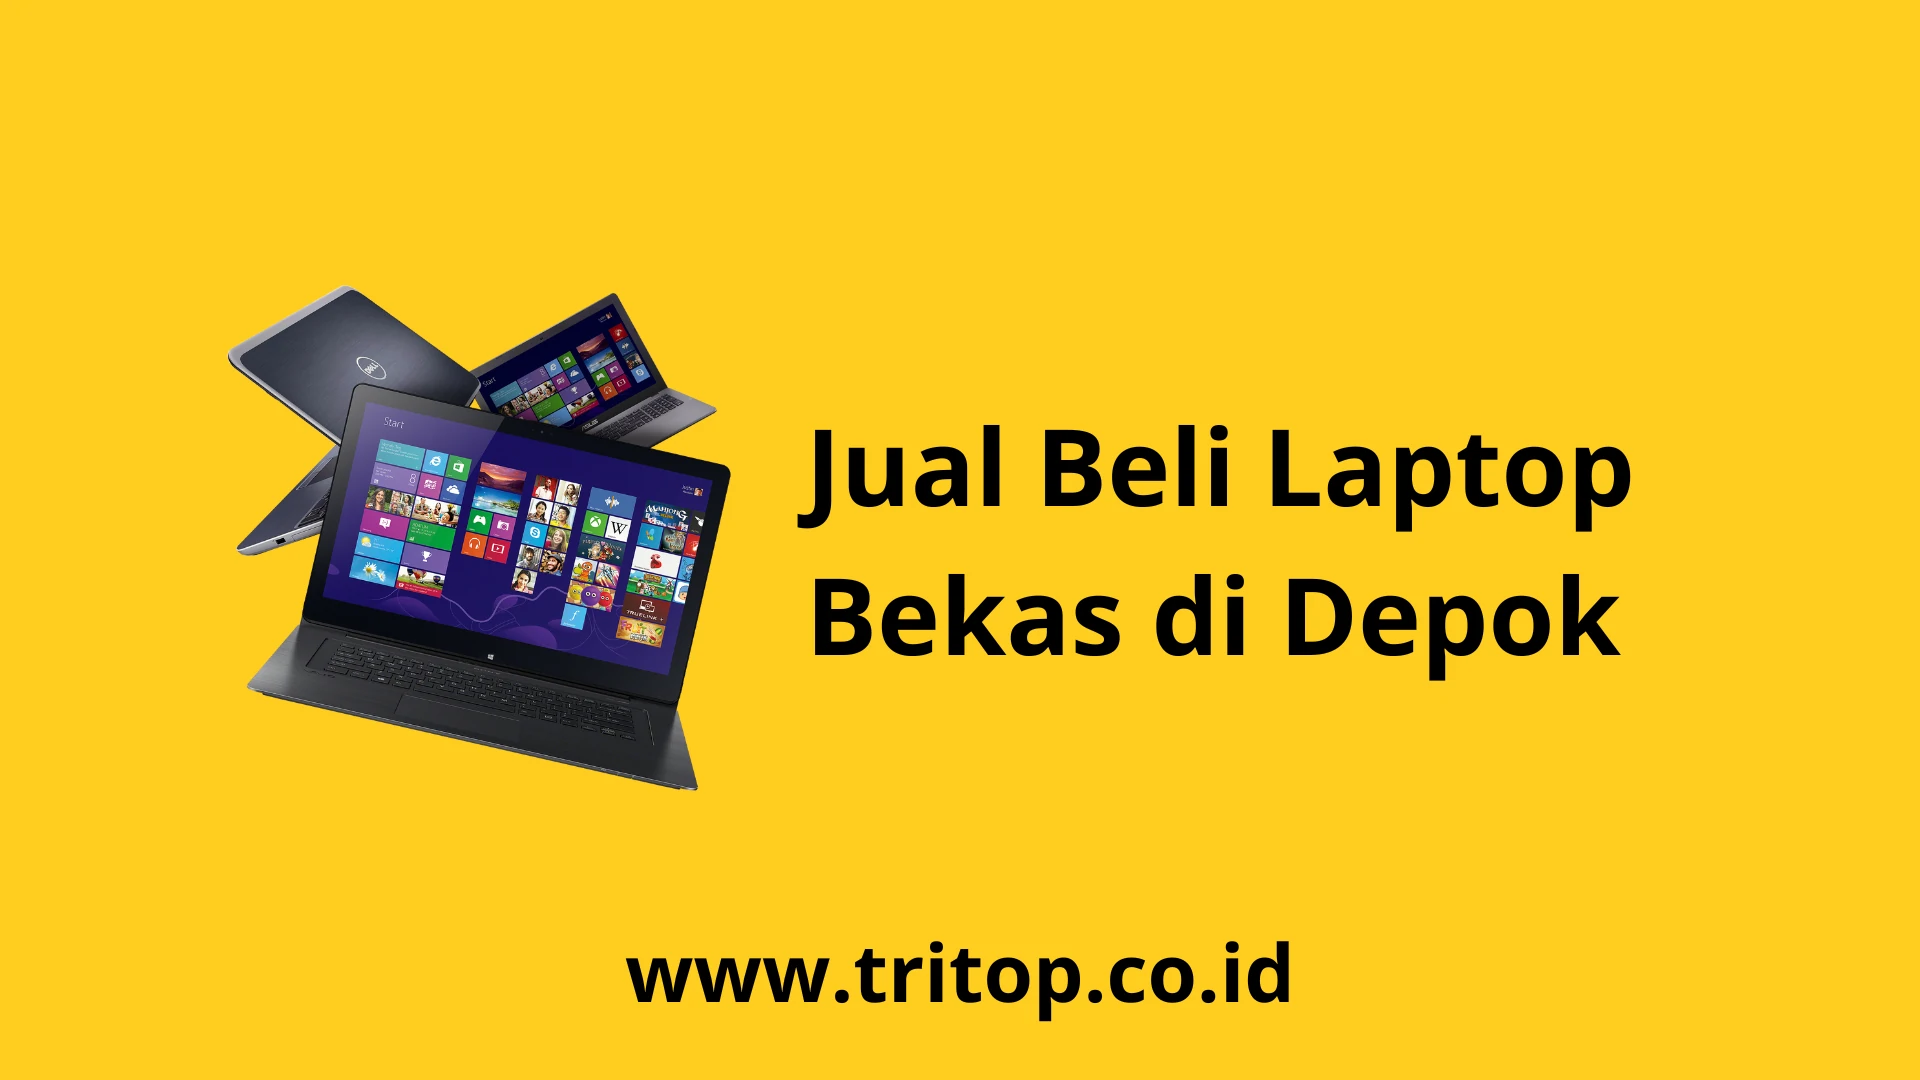 Jual Beli Laptop Bekas Depok Tritop.co.id